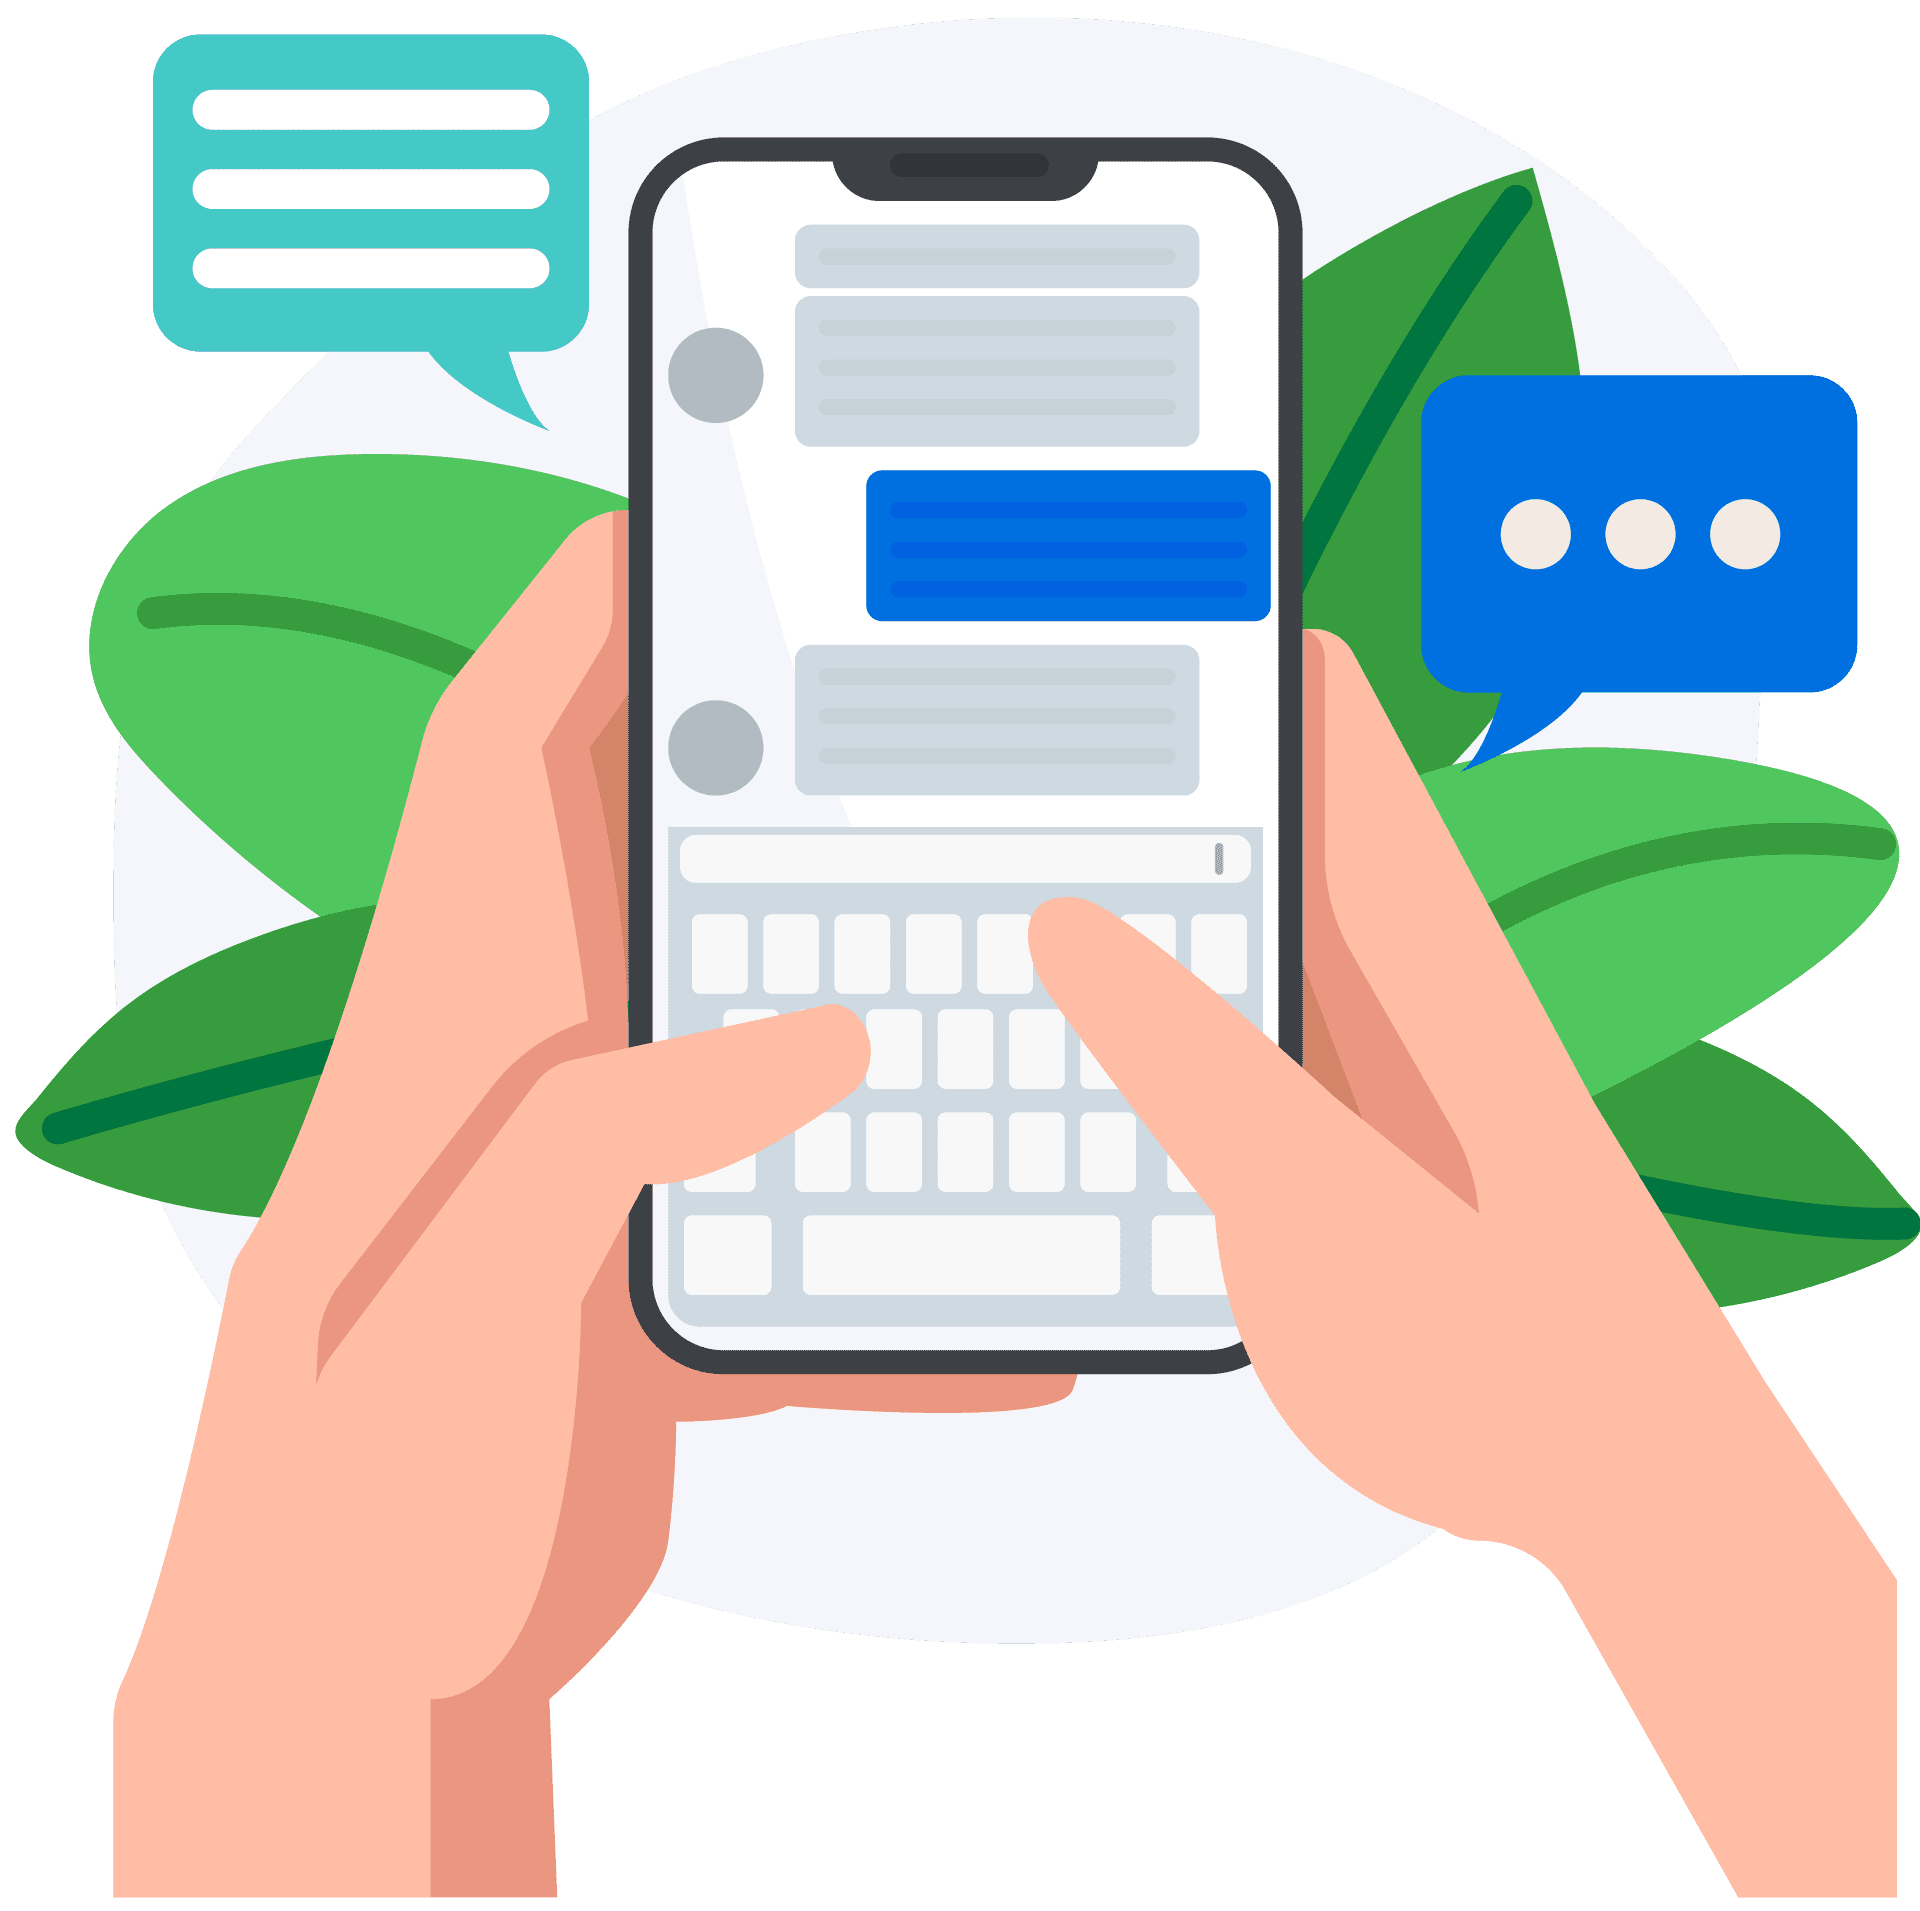 SMS, SMS messages, SMS message, short message service, multimedia messaging service